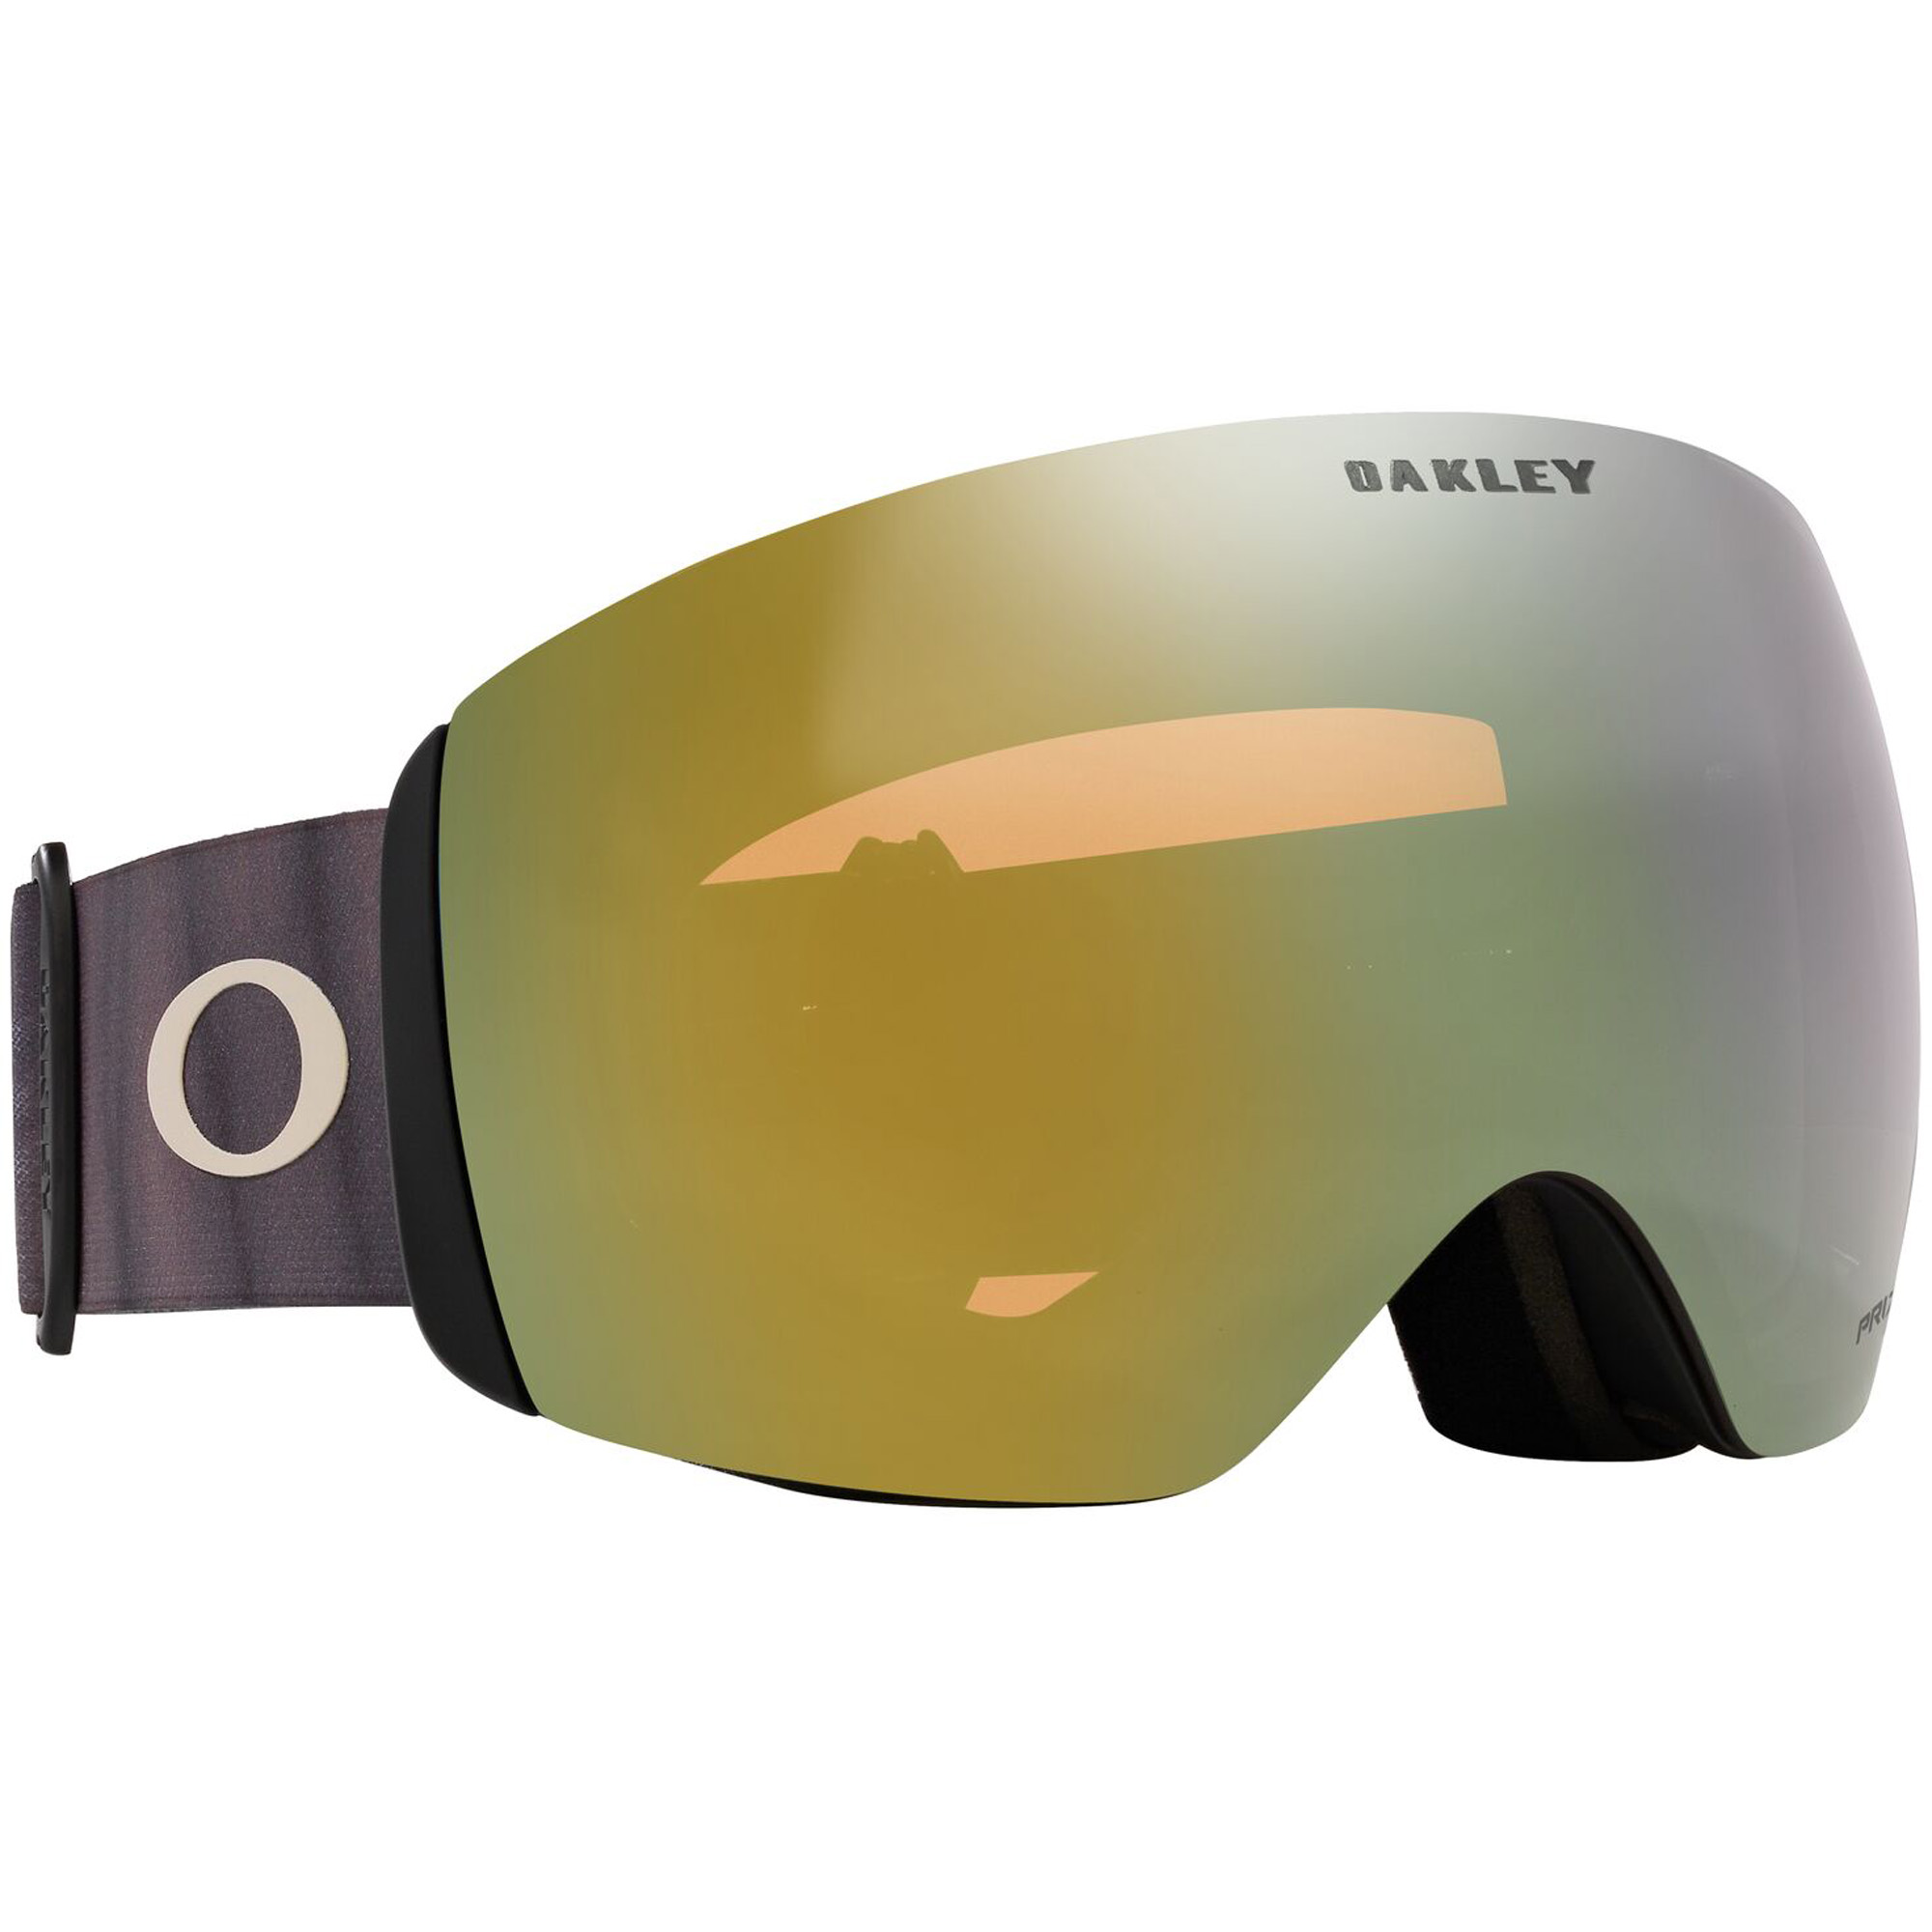 Photos - Ski Goggles Oakley Flight Deck L Ski/Snowboard Goggles Grey Smoke/Prizm Sage Gold 0OO7 